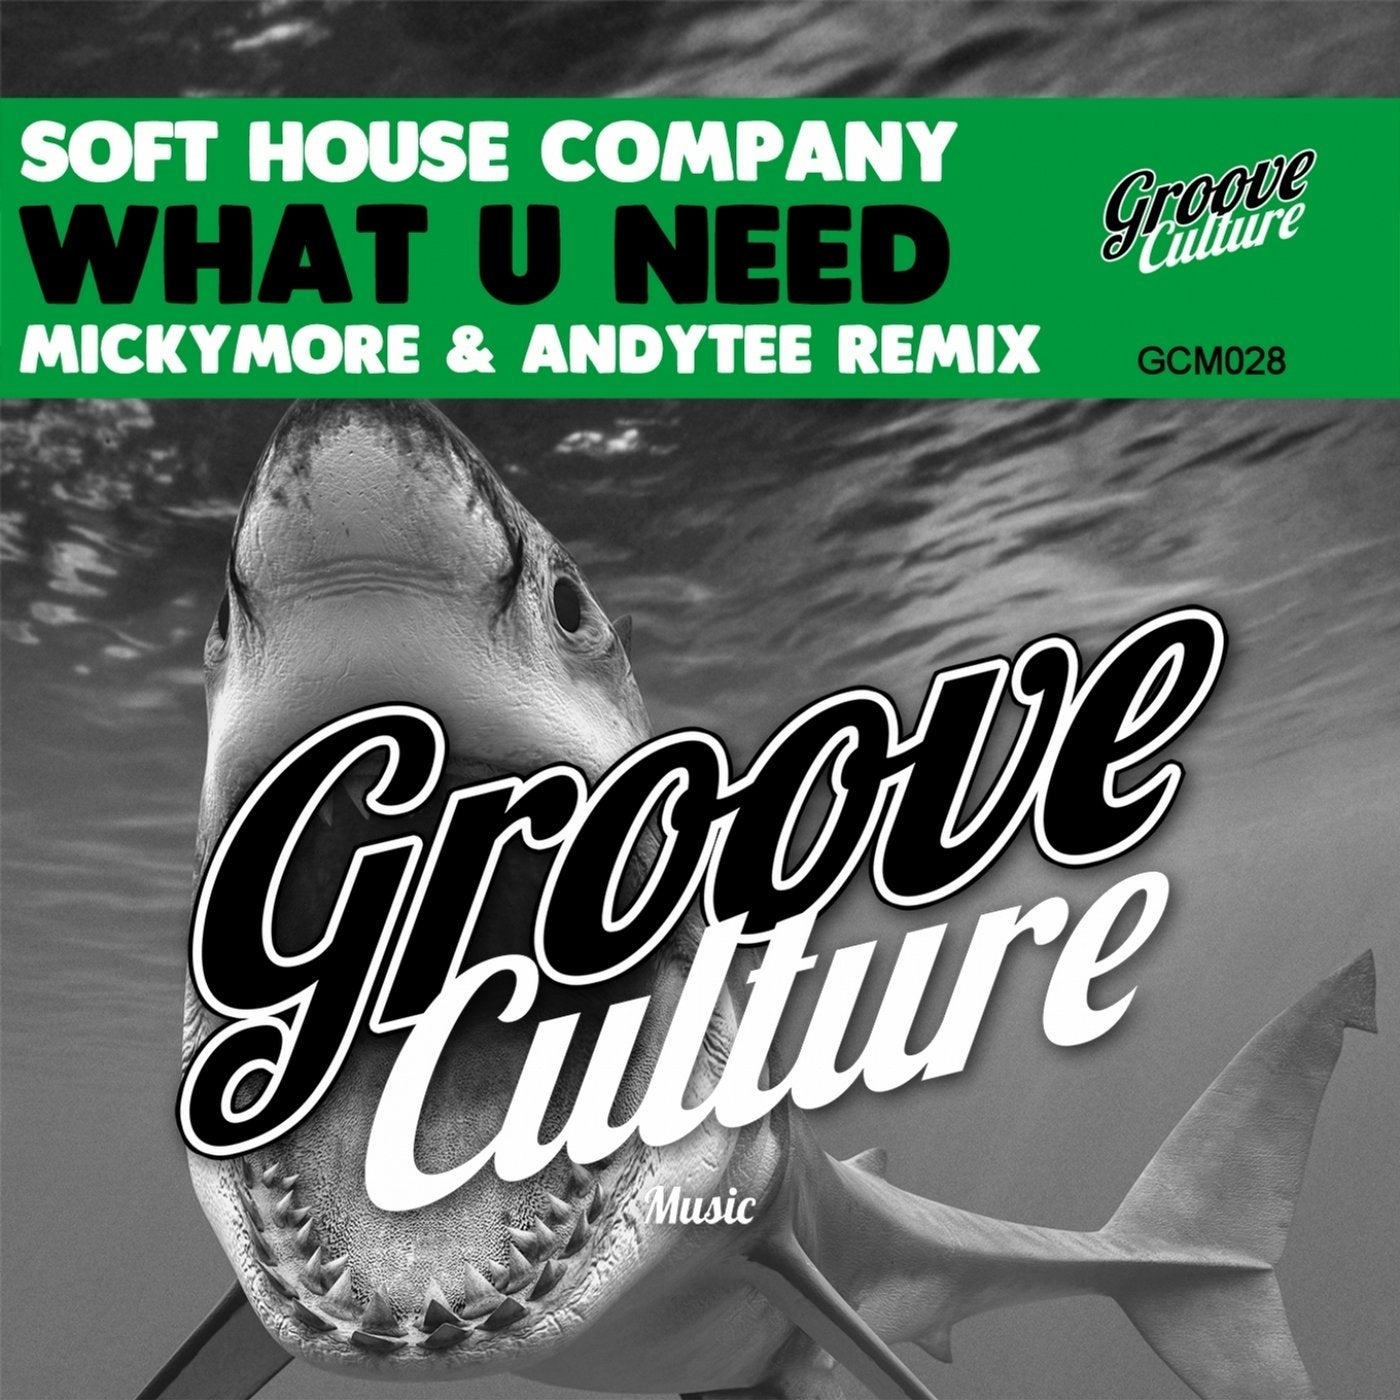 Глупая remix. Софт Хаус. Groove Culture. Микки море, Andy Tee. Альбом Micky more & Andy Tee: the collection.